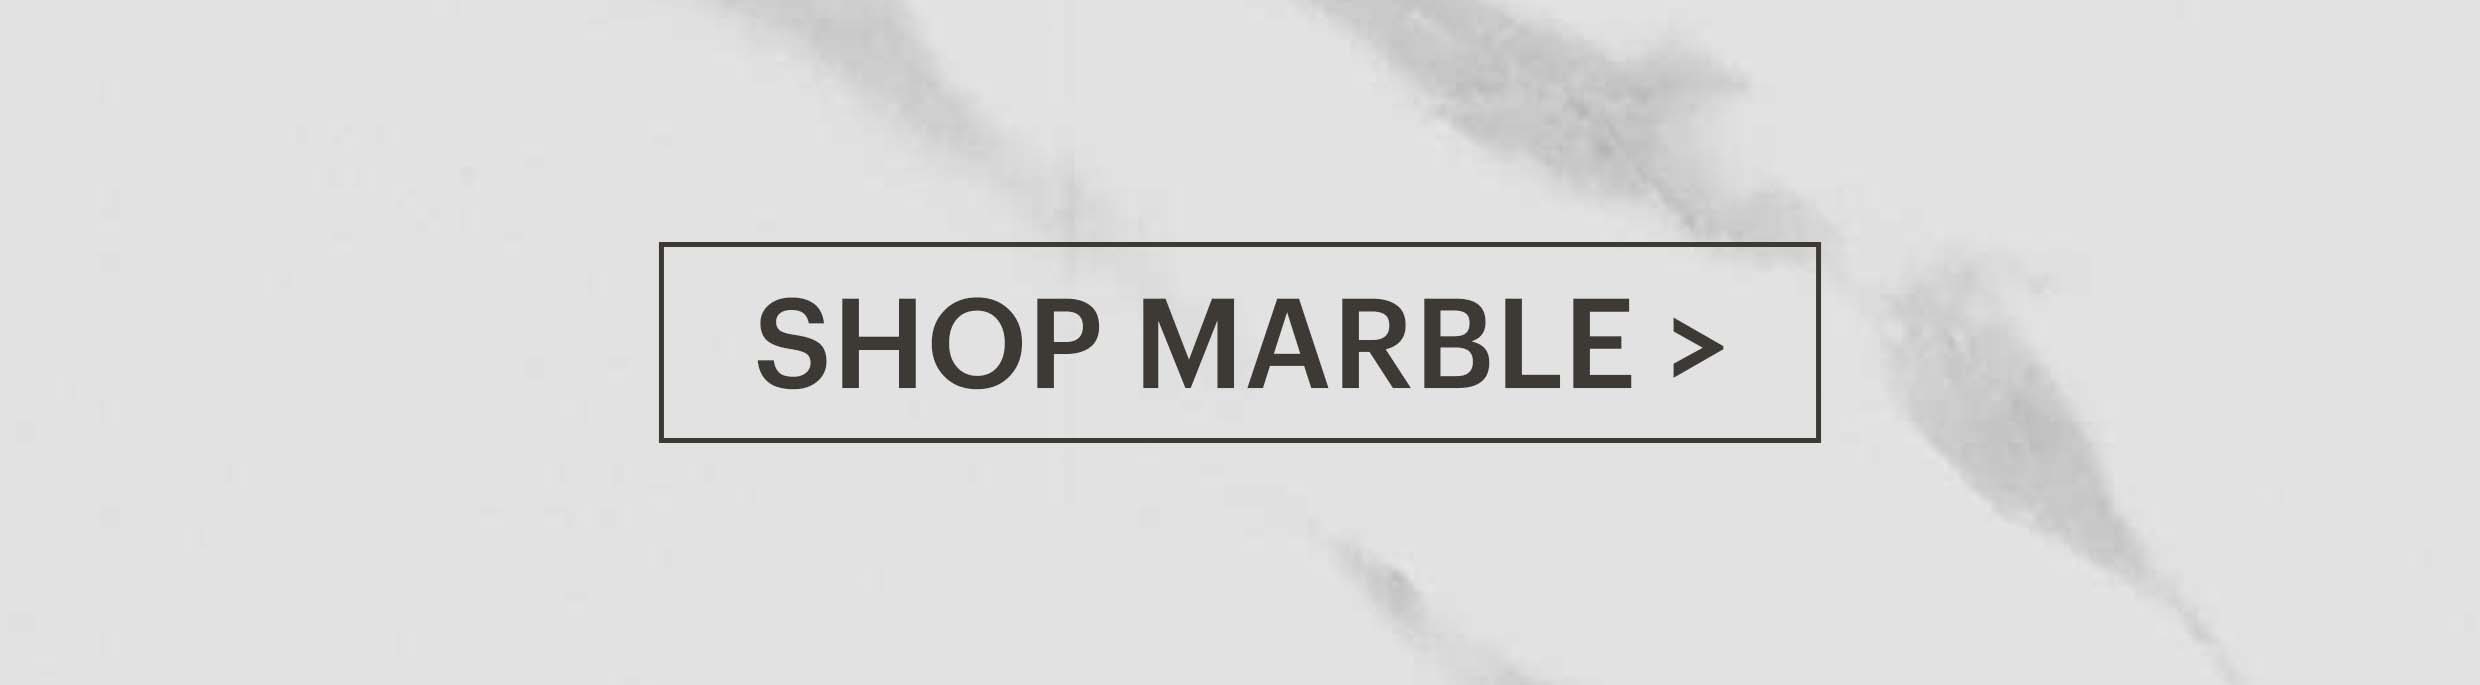 shop-marble.jpg